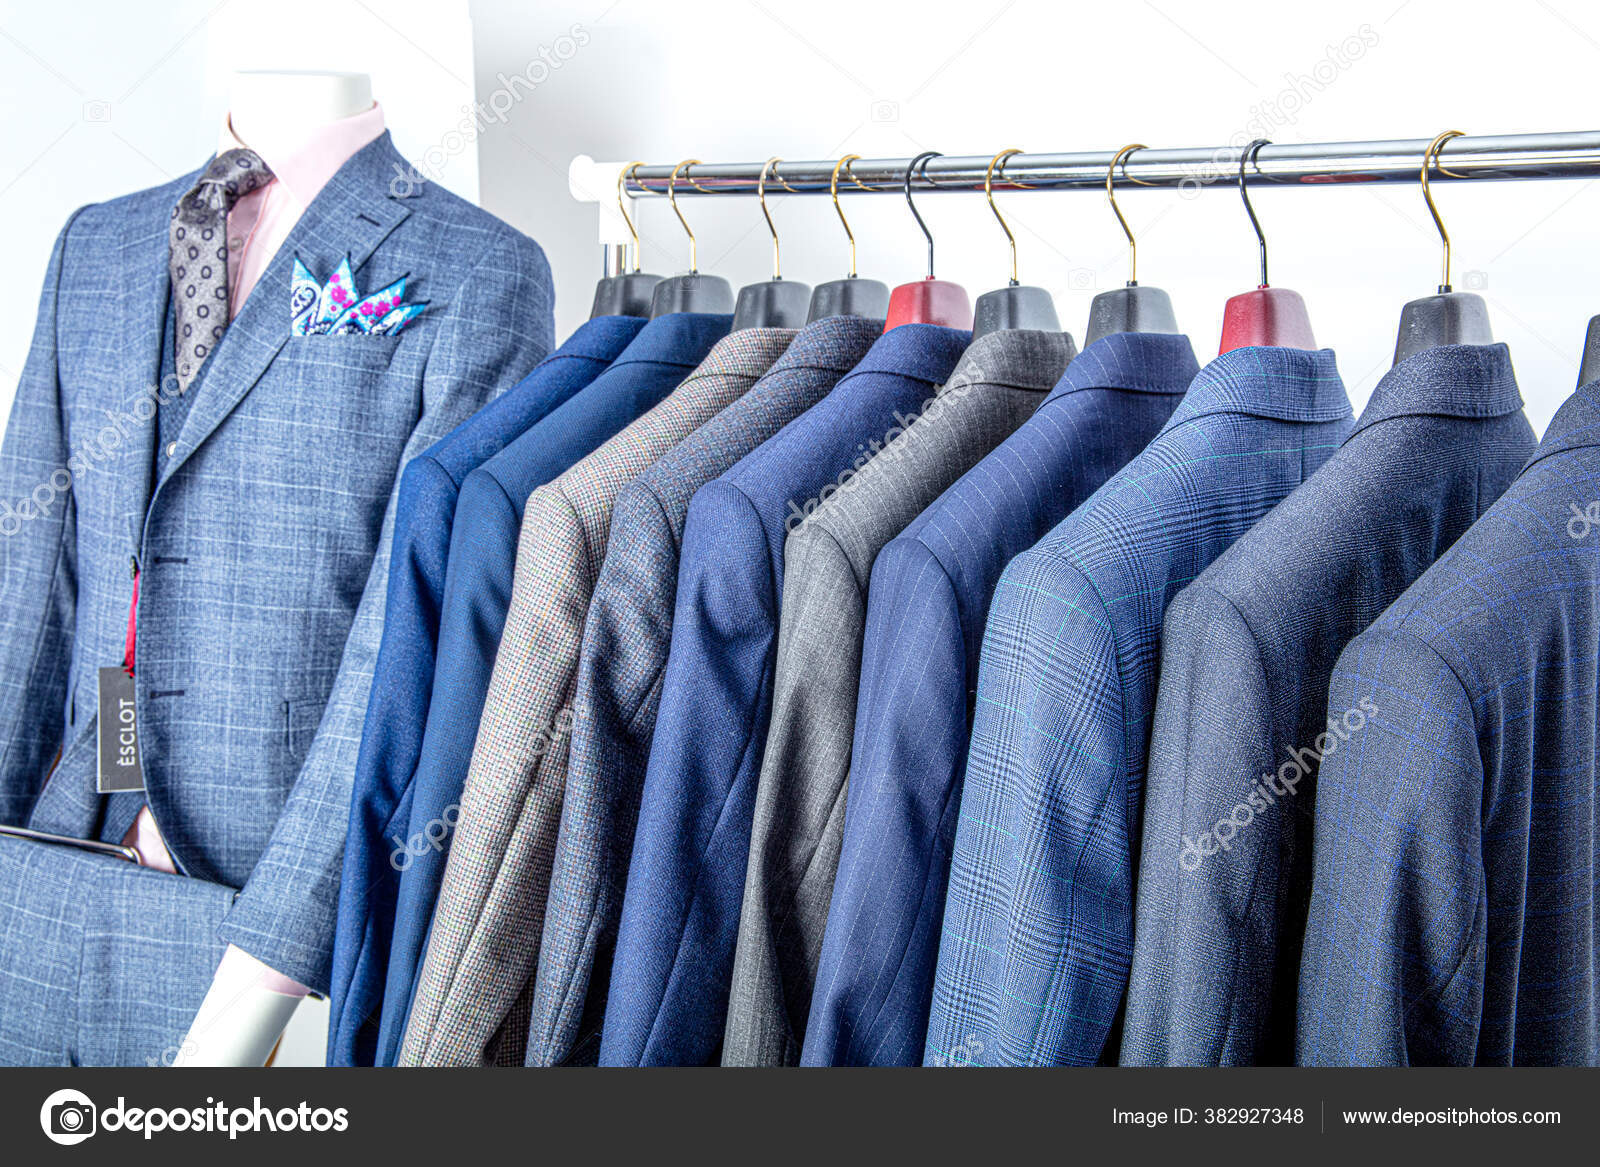 https://st4.depositphotos.com/36716422/38292/i/1600/depositphotos_382927348-stock-photo-men-jackets-hangers-men-store.jpg